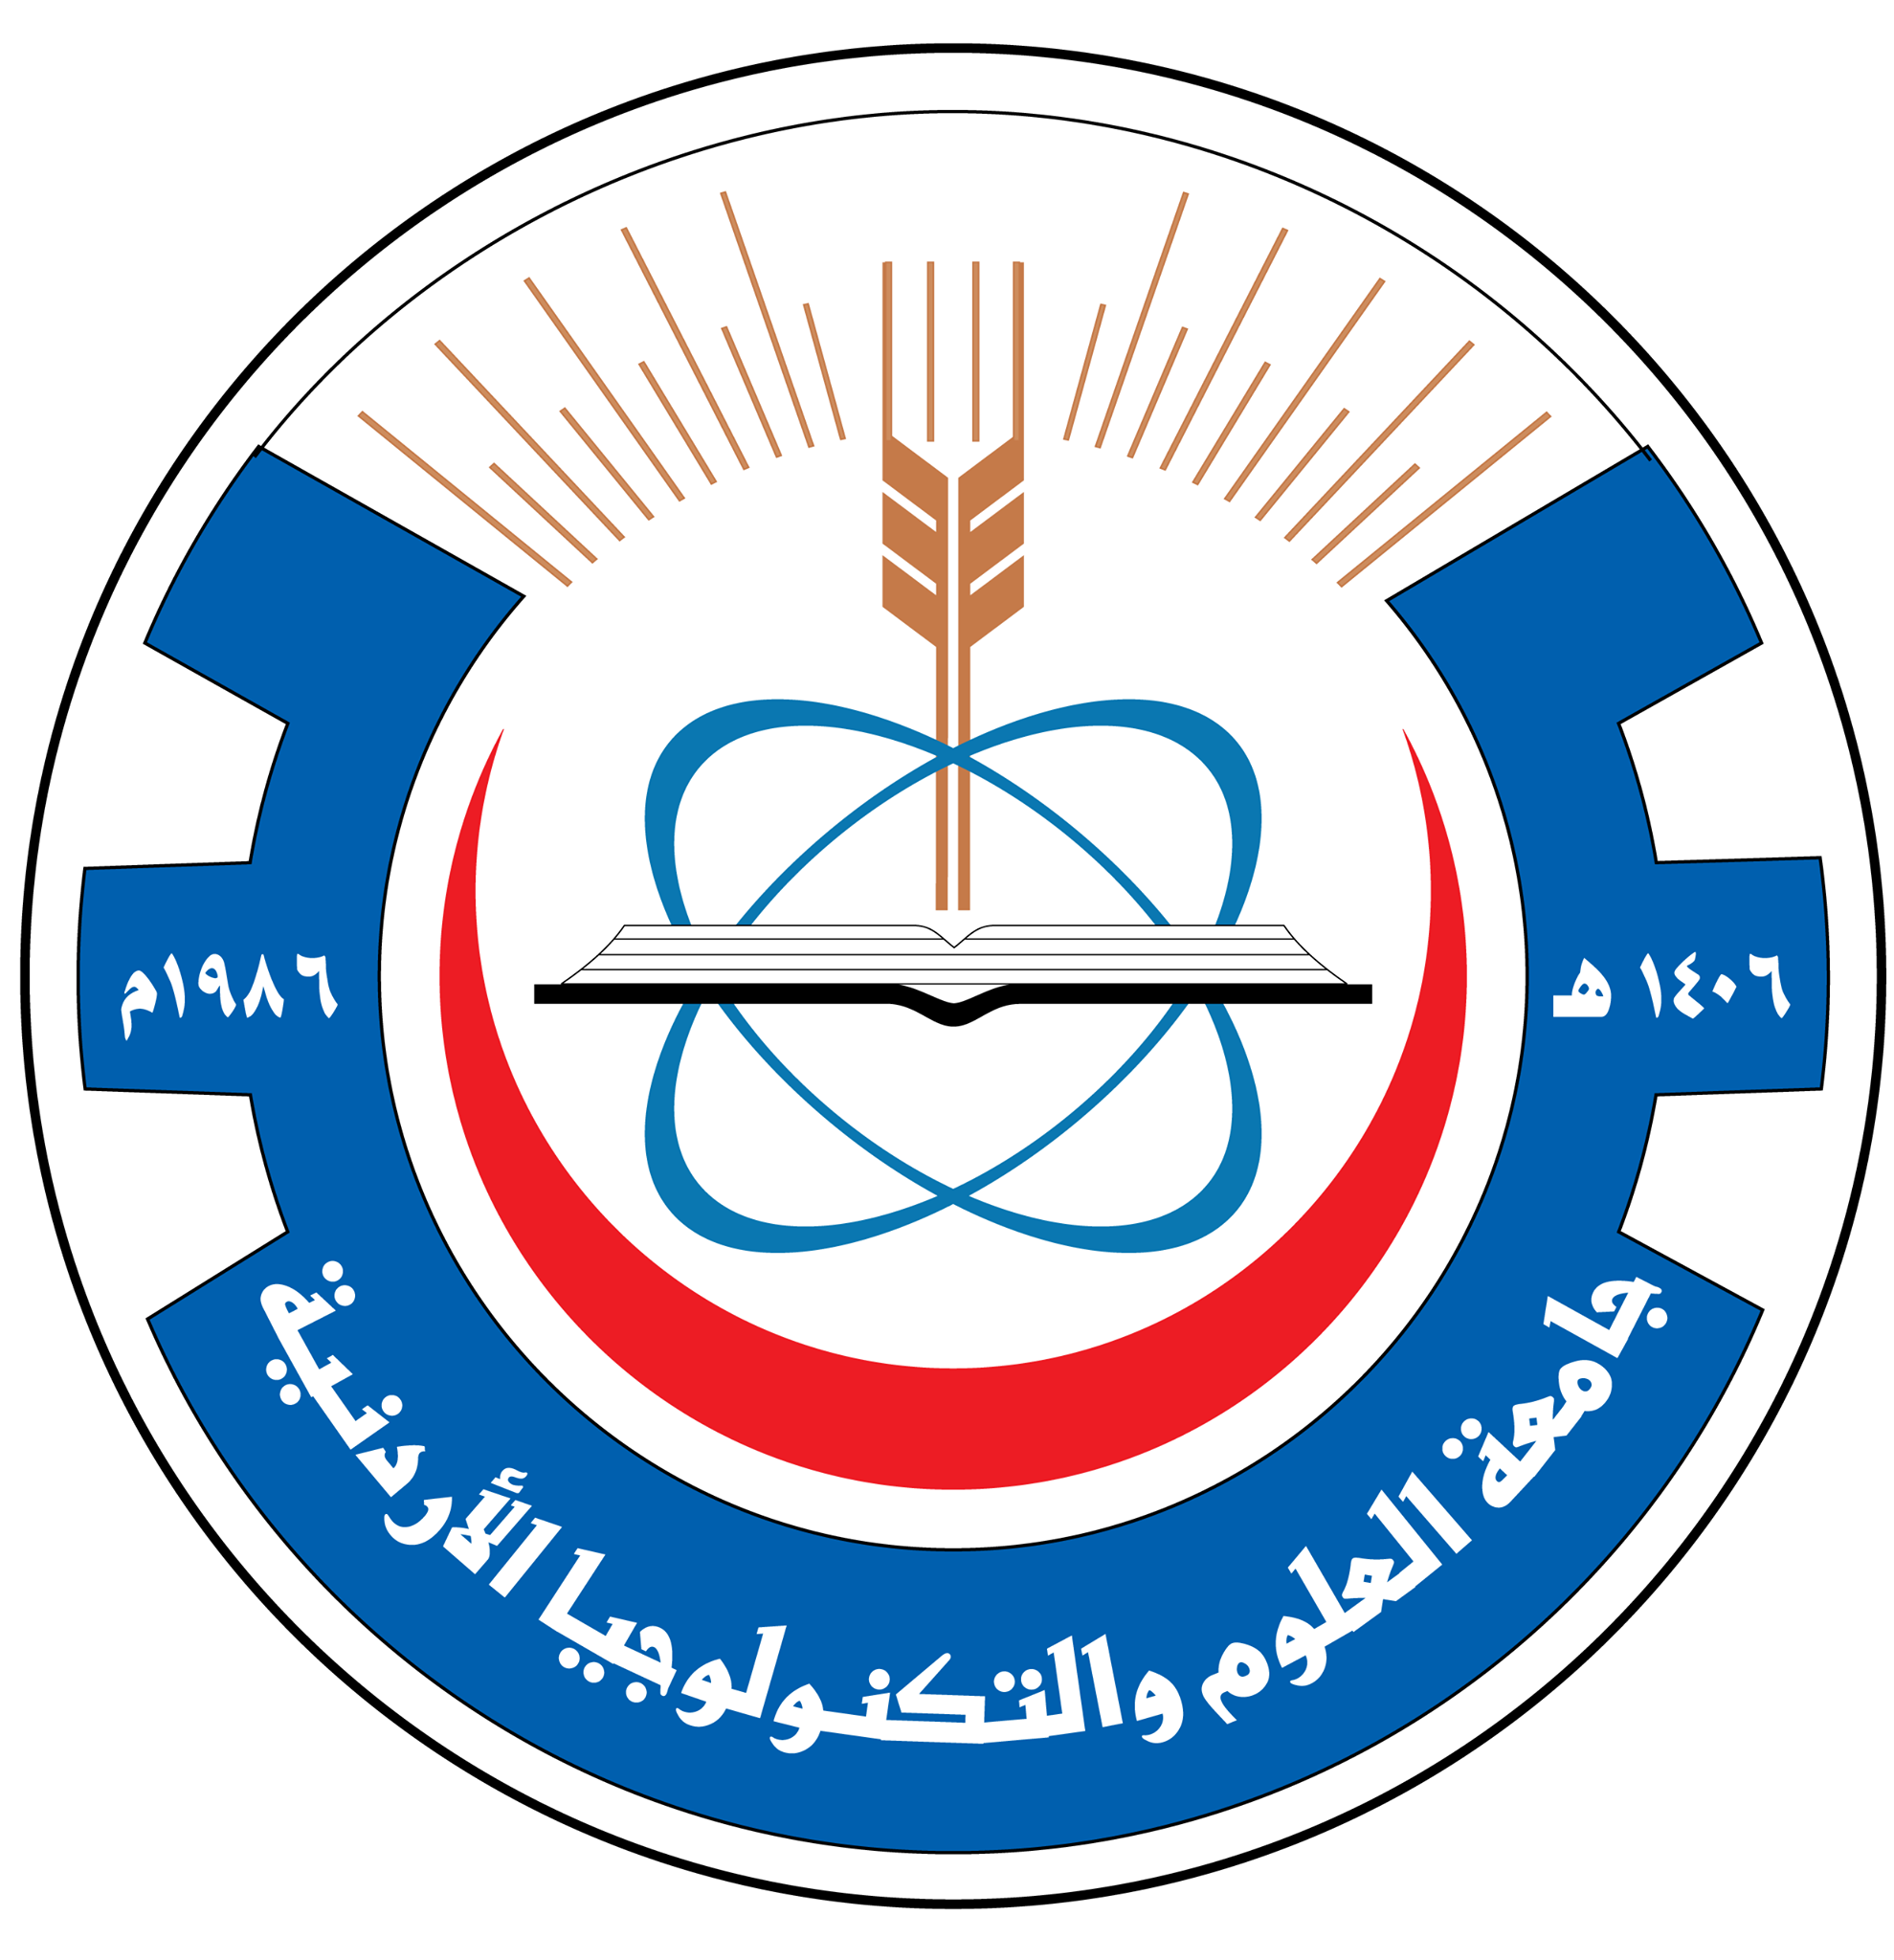 Jordan University of Science and Technology logo